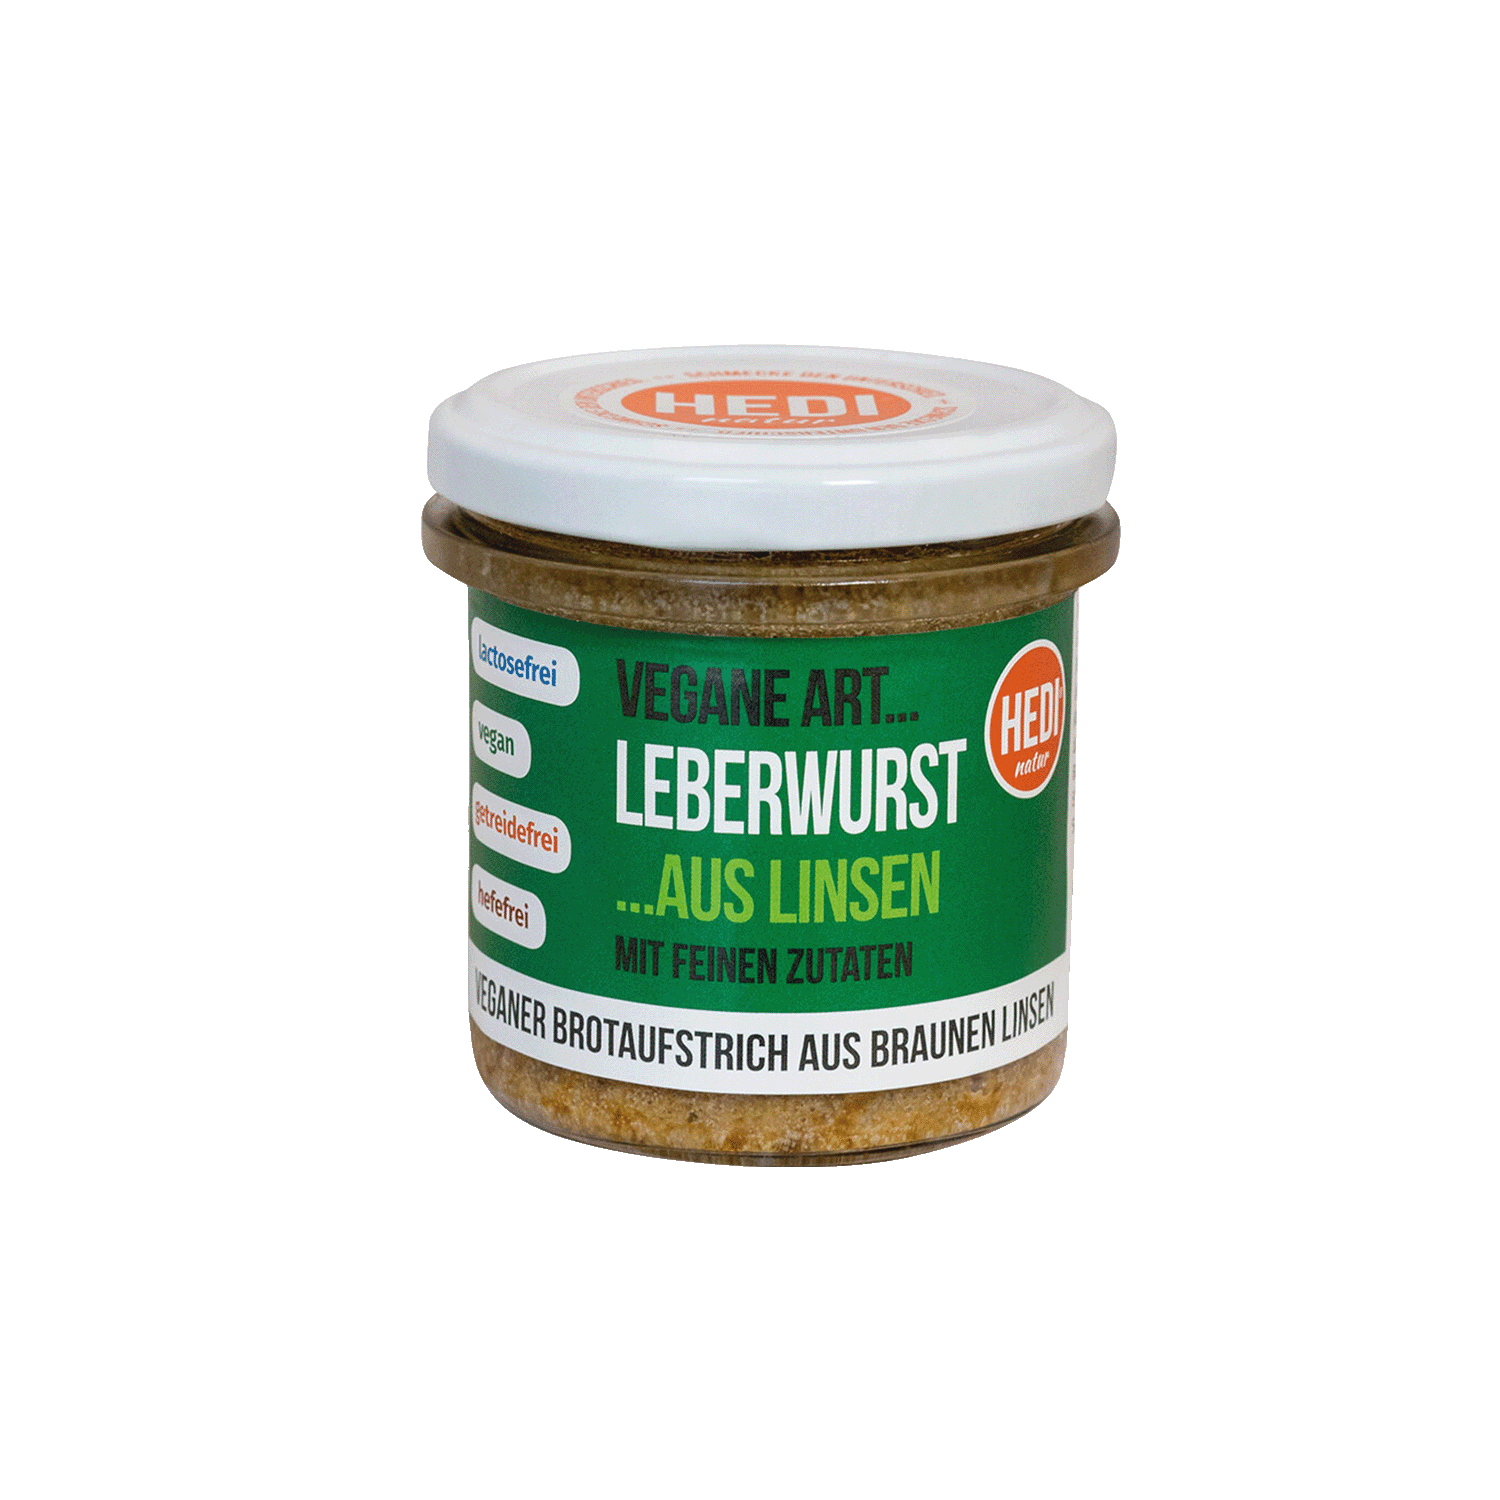 Vegan Style "Leberwurst" Made From Lentils, Organic, 140g